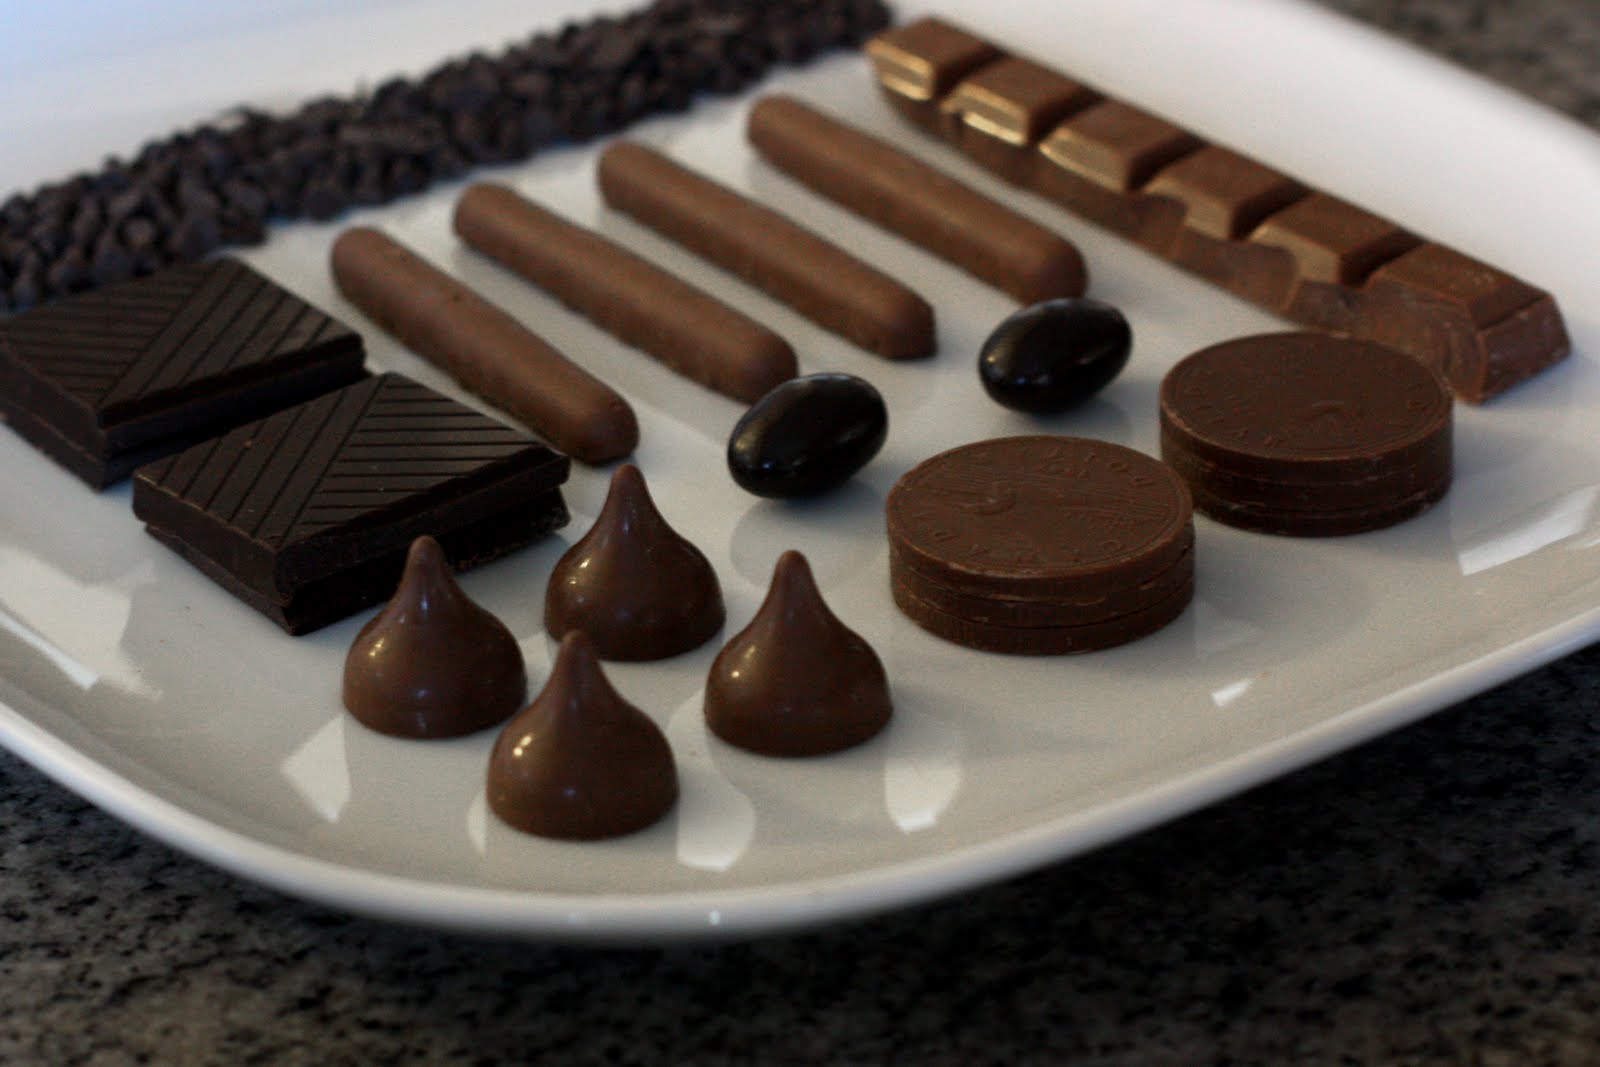 Chocolate, Aroha Silhouettes, Plate, Spread, Chocoholic, Molecular Addictions